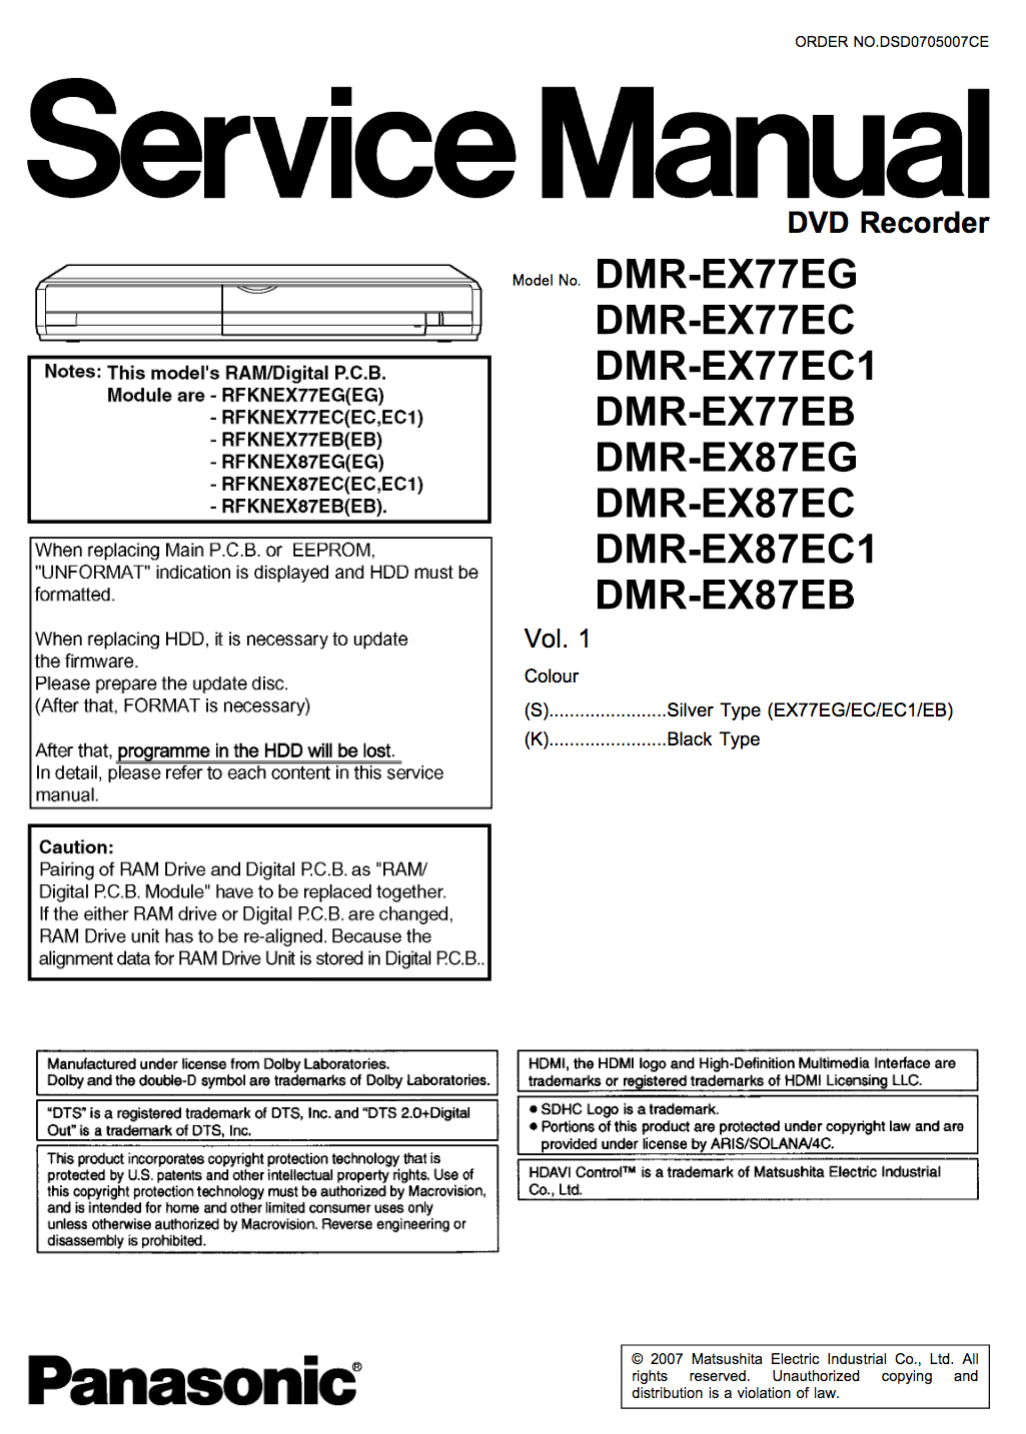 Panasonic DMR-EX77 DMR-EX87 Service Manual